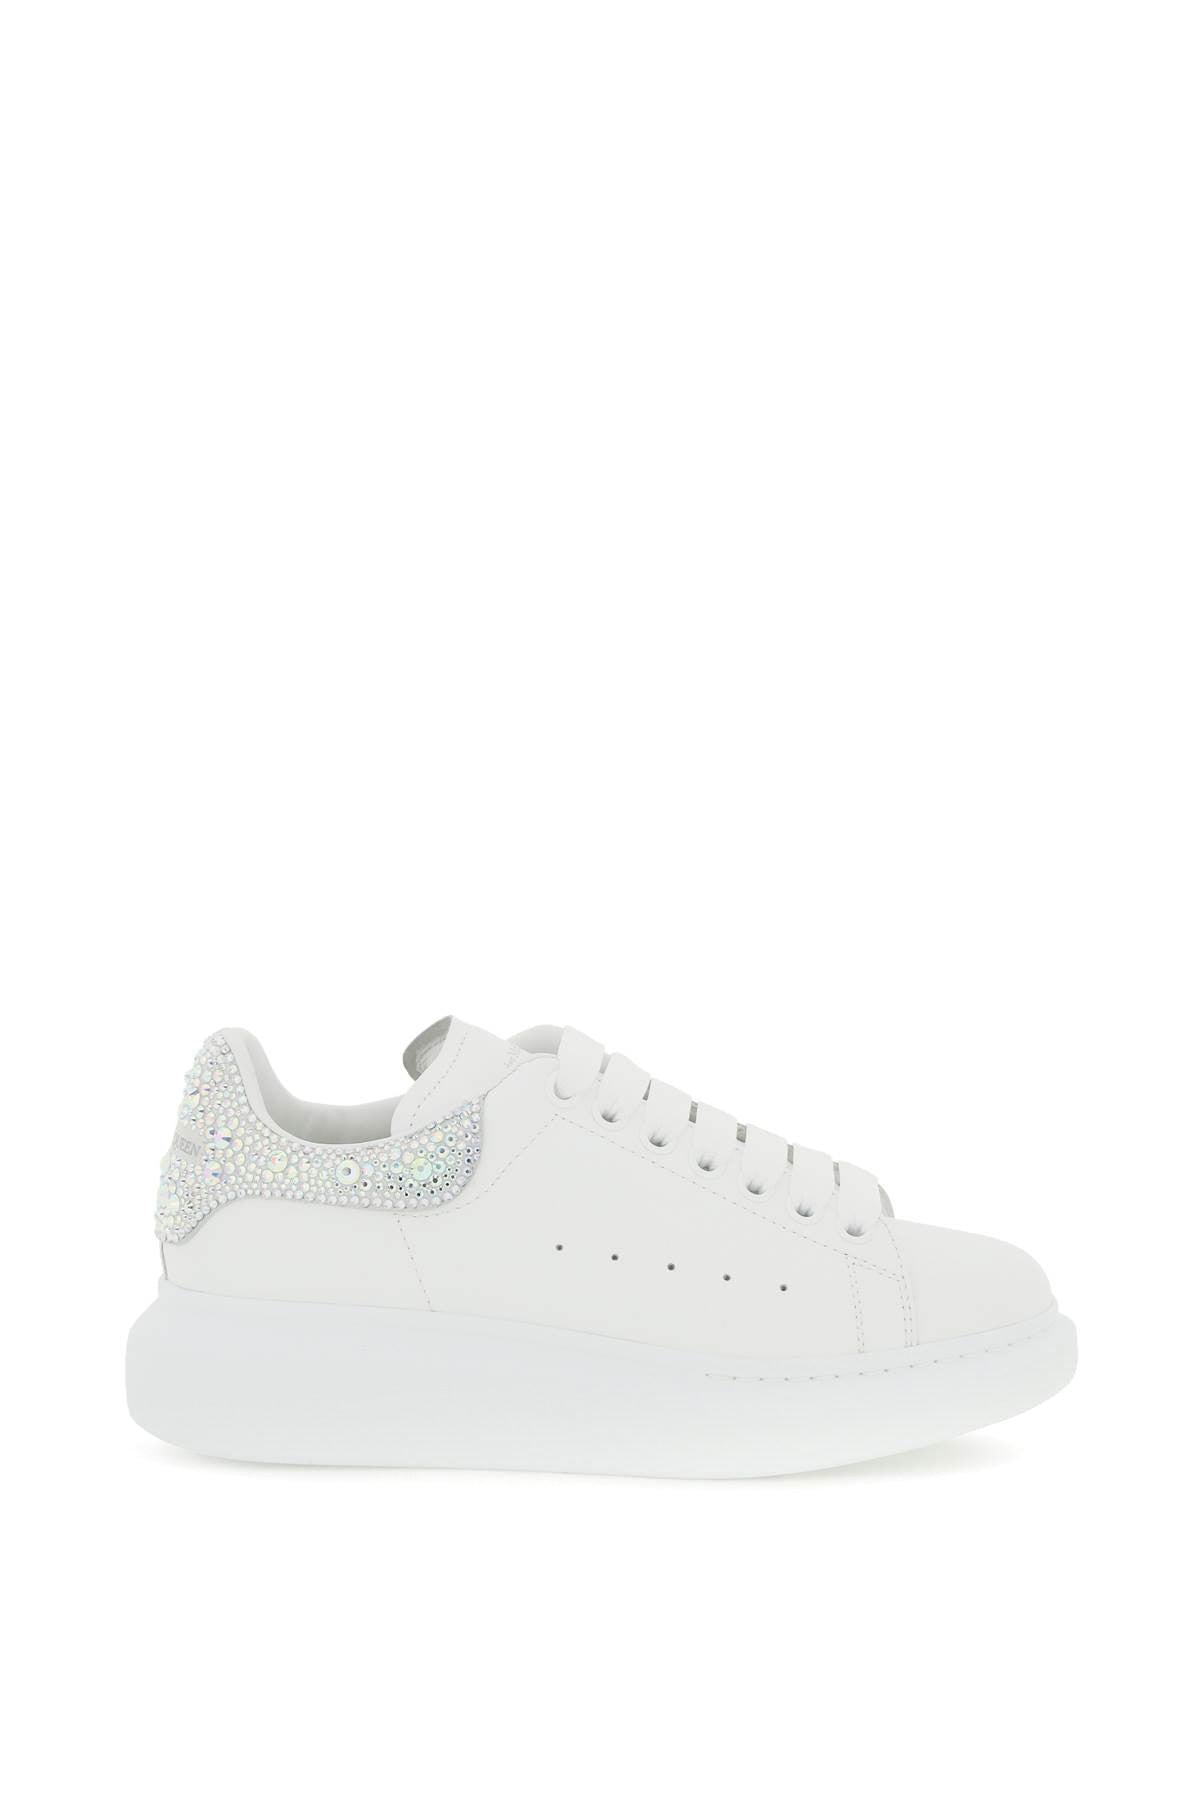 Alexander McQueen Crystal Oversize Sneakers in White | Lyst